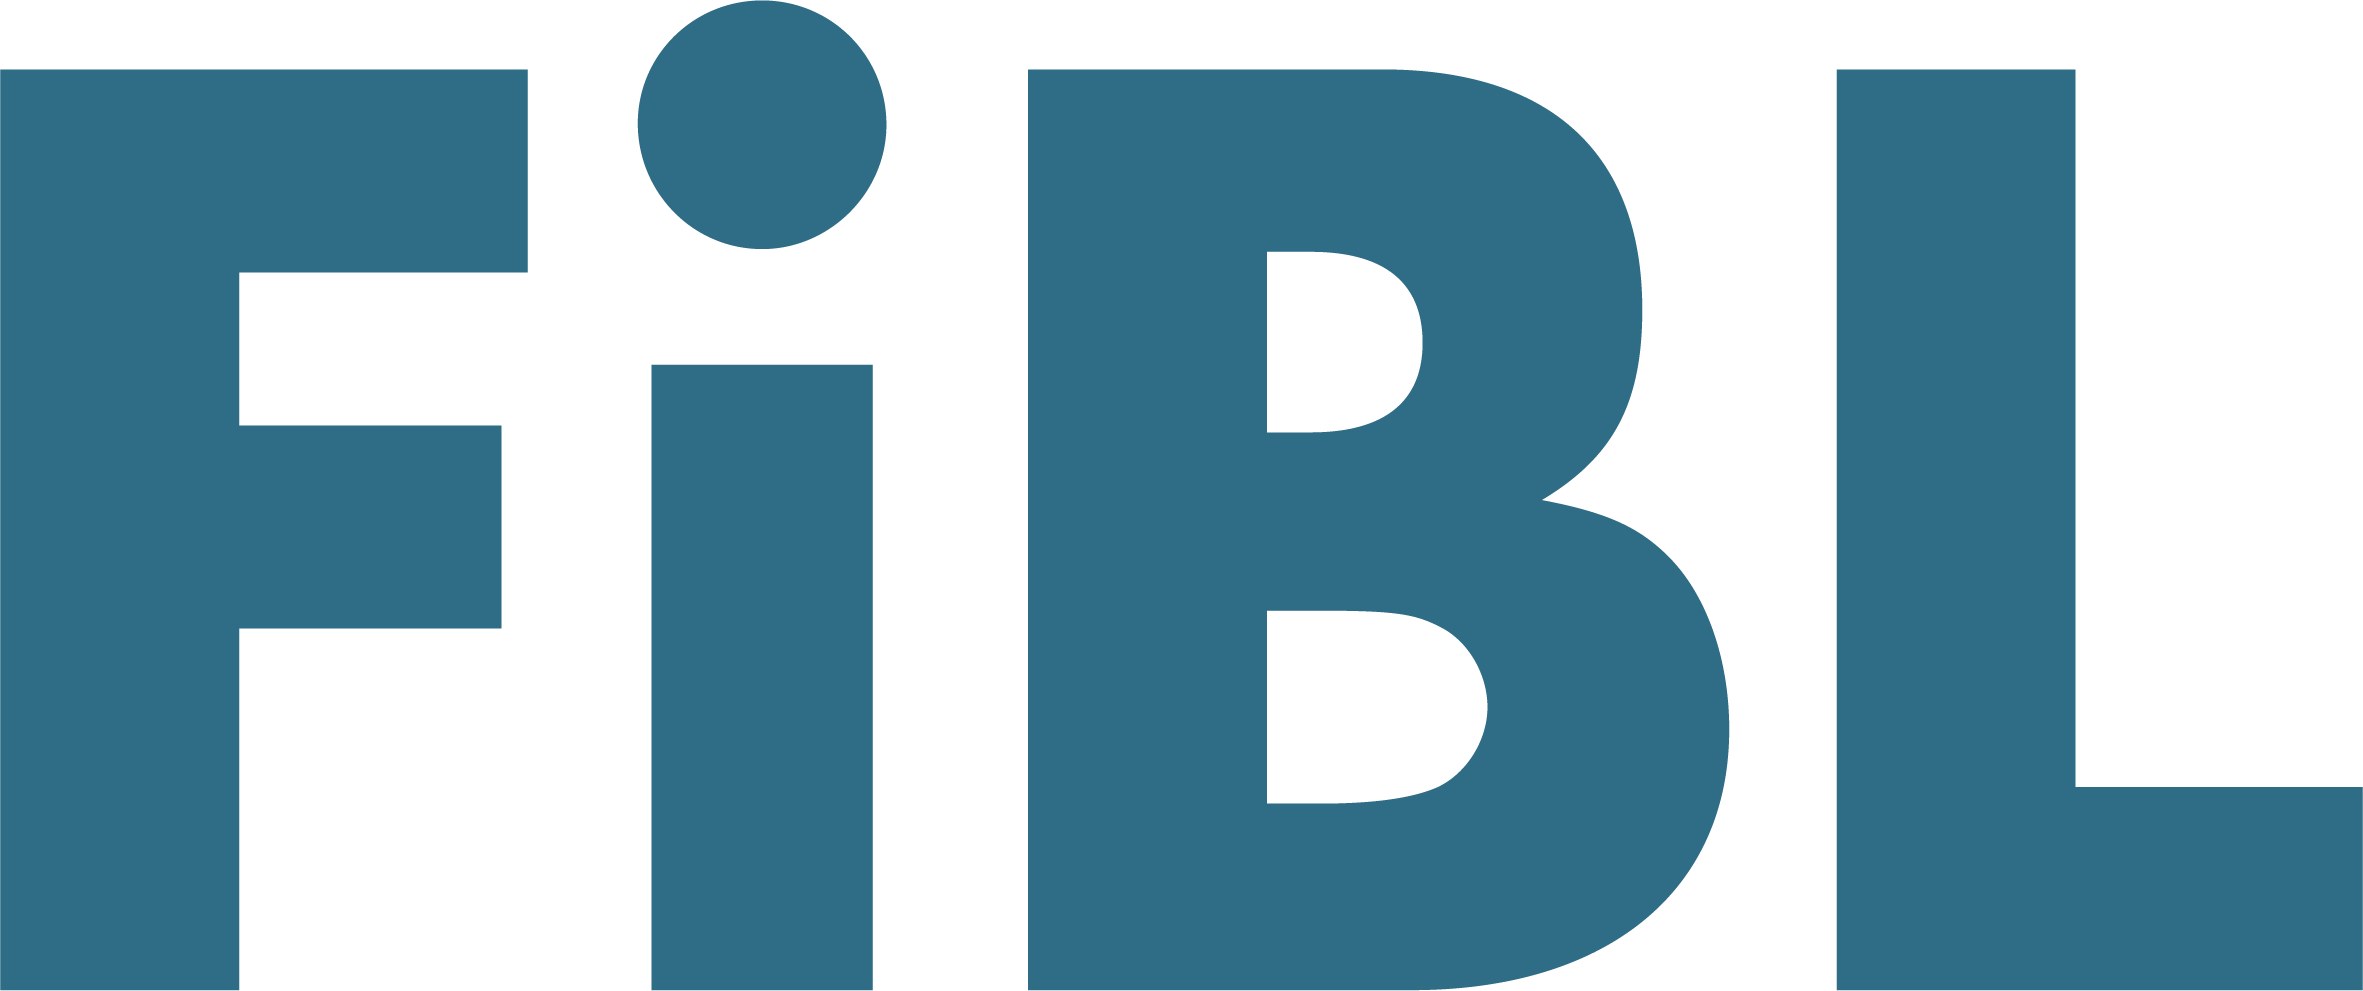 fibl-logo